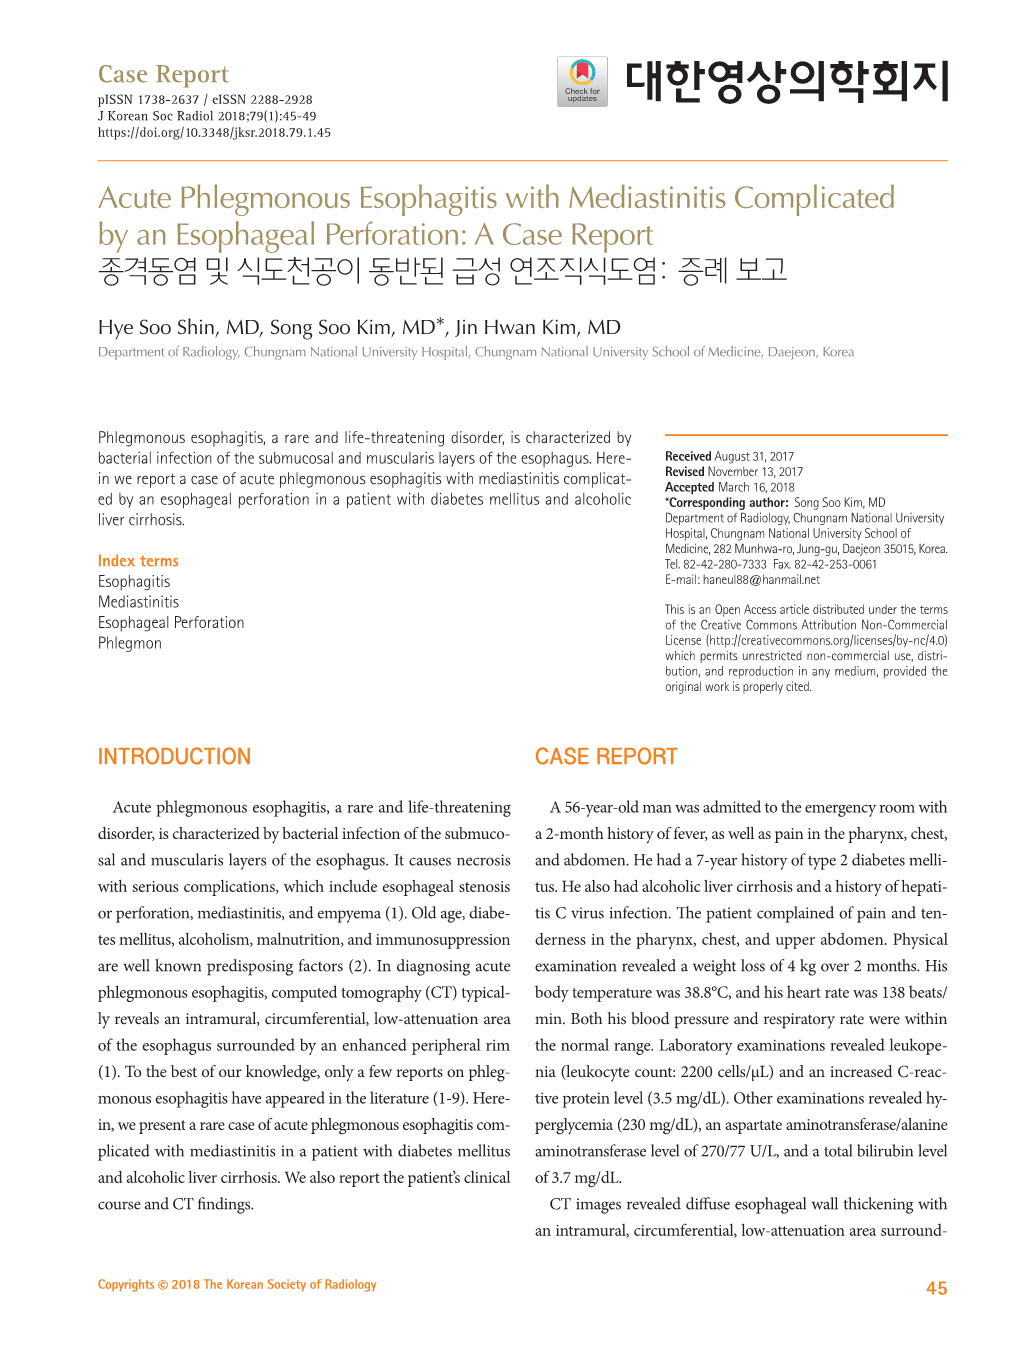 Acute Phlegmonous Esophagitis with Mediastinitis Complicated by an Esophageal Perforation: a Case Report 종격동염 및 식도천공이 동반된 급성 연조직식도염: 증례 보고